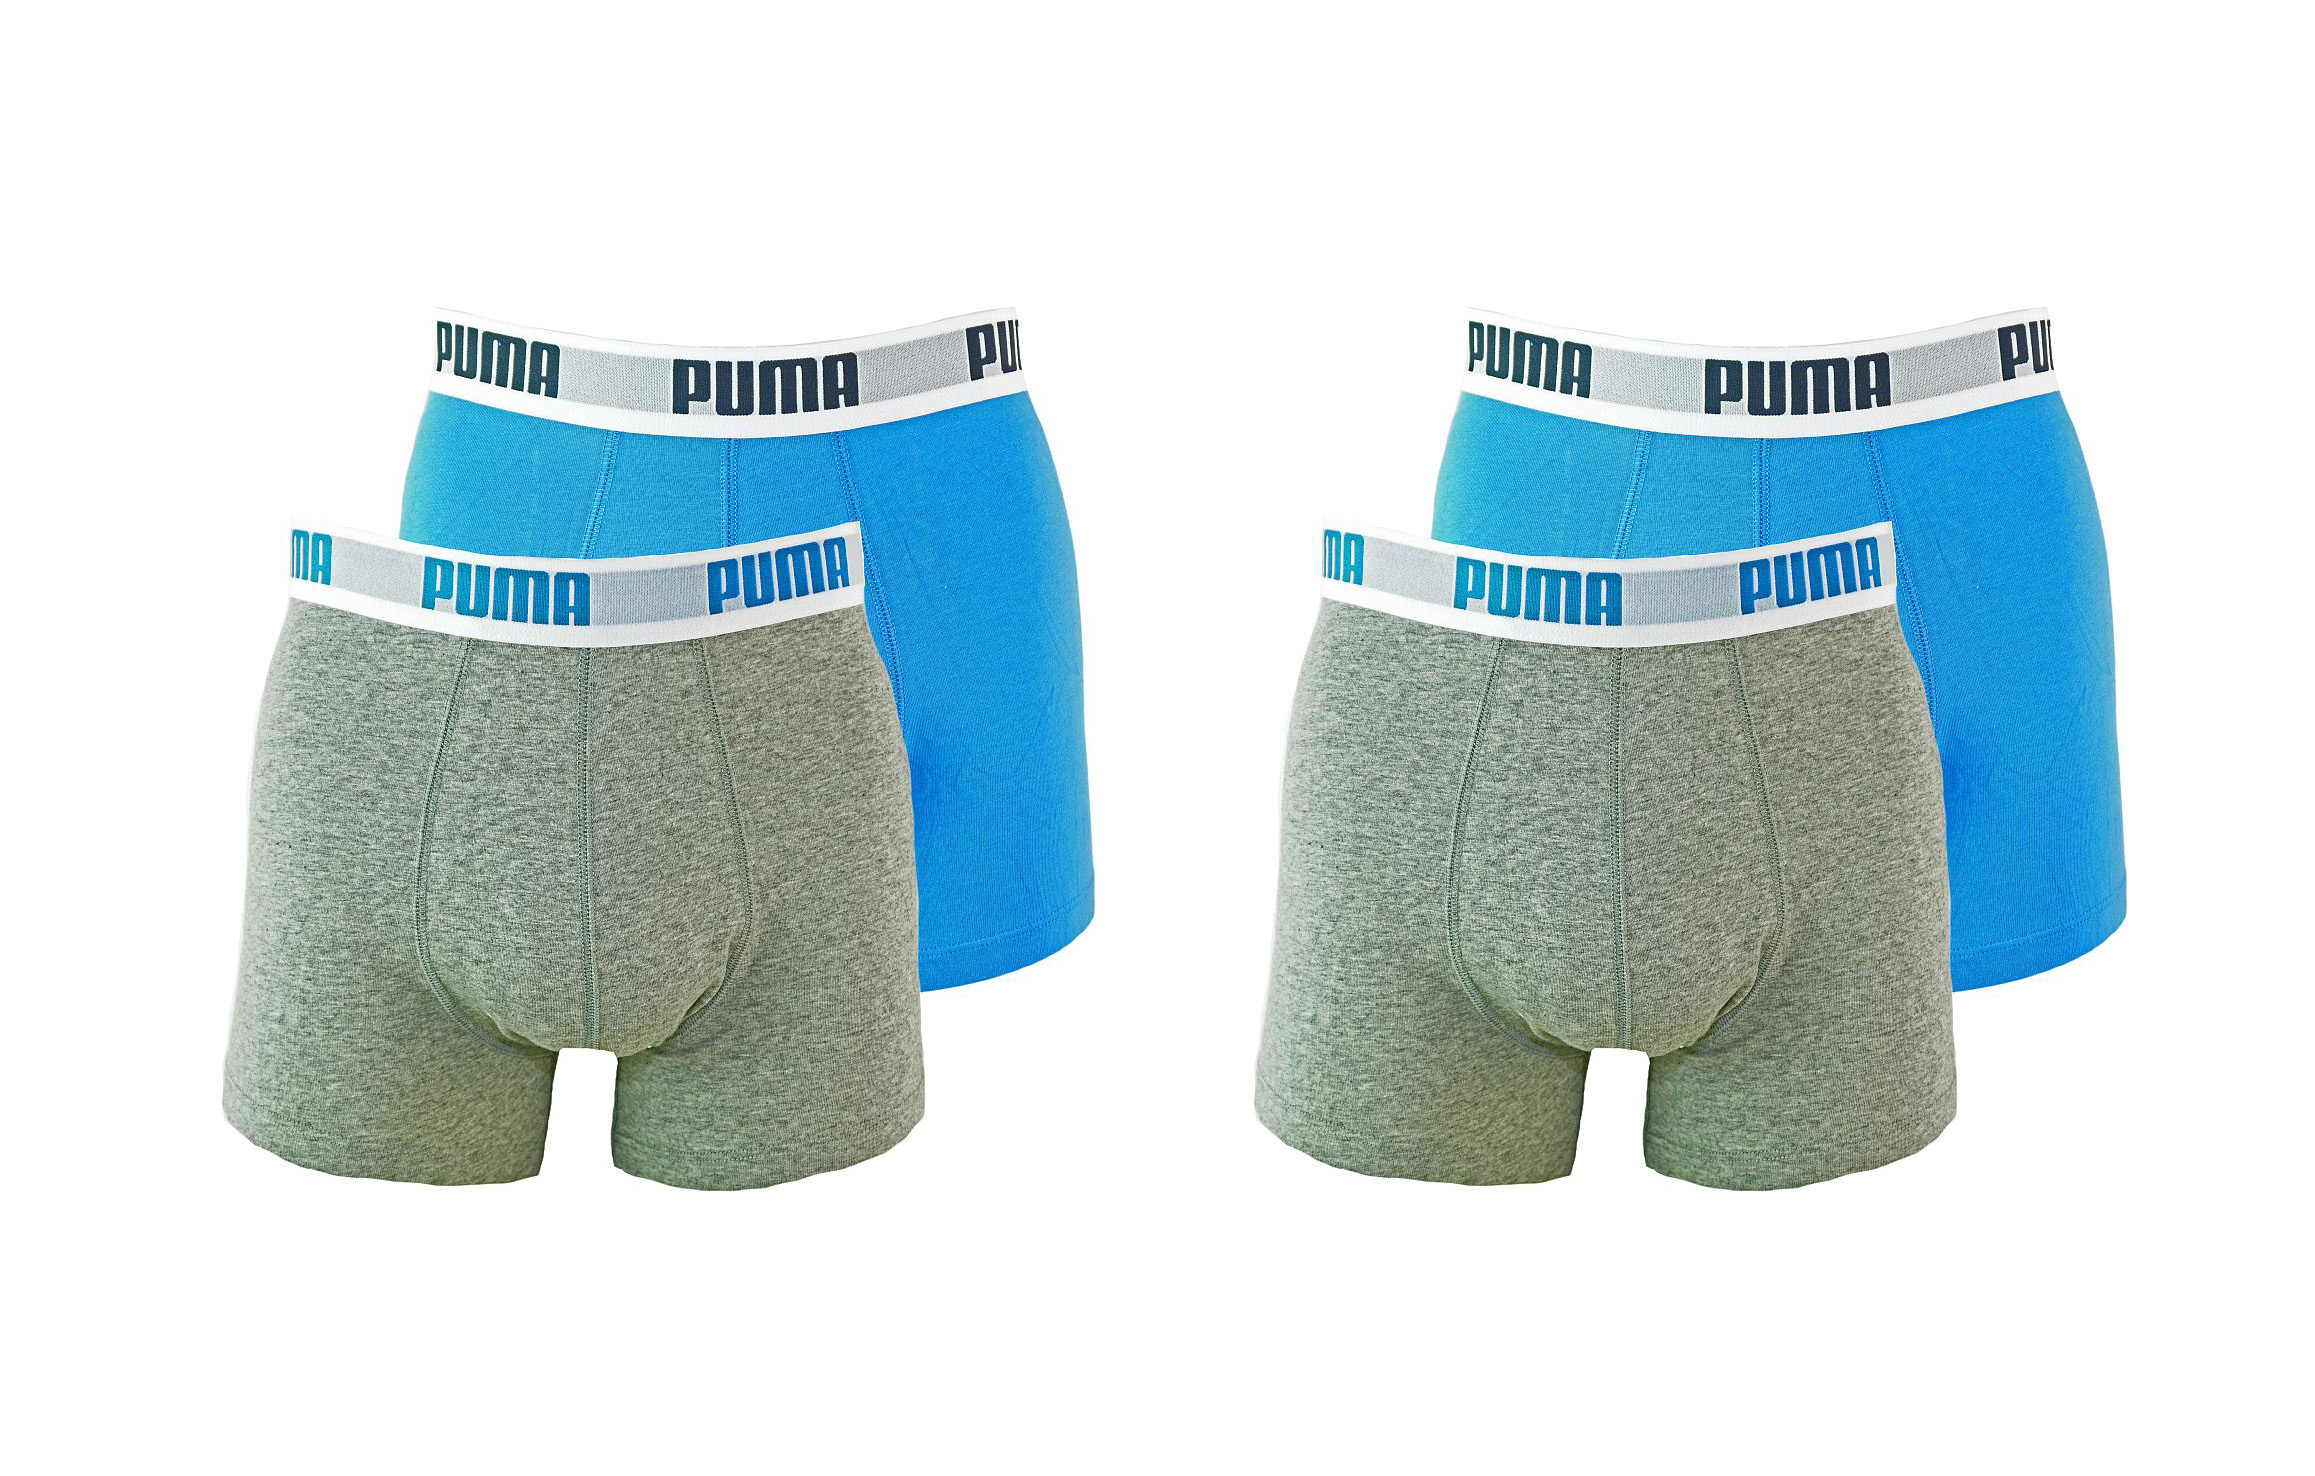 PUMA Shorts Unterhosen 2 x 2er Pack Boxer 521015001 417 020 blue grey SF17-PMS2